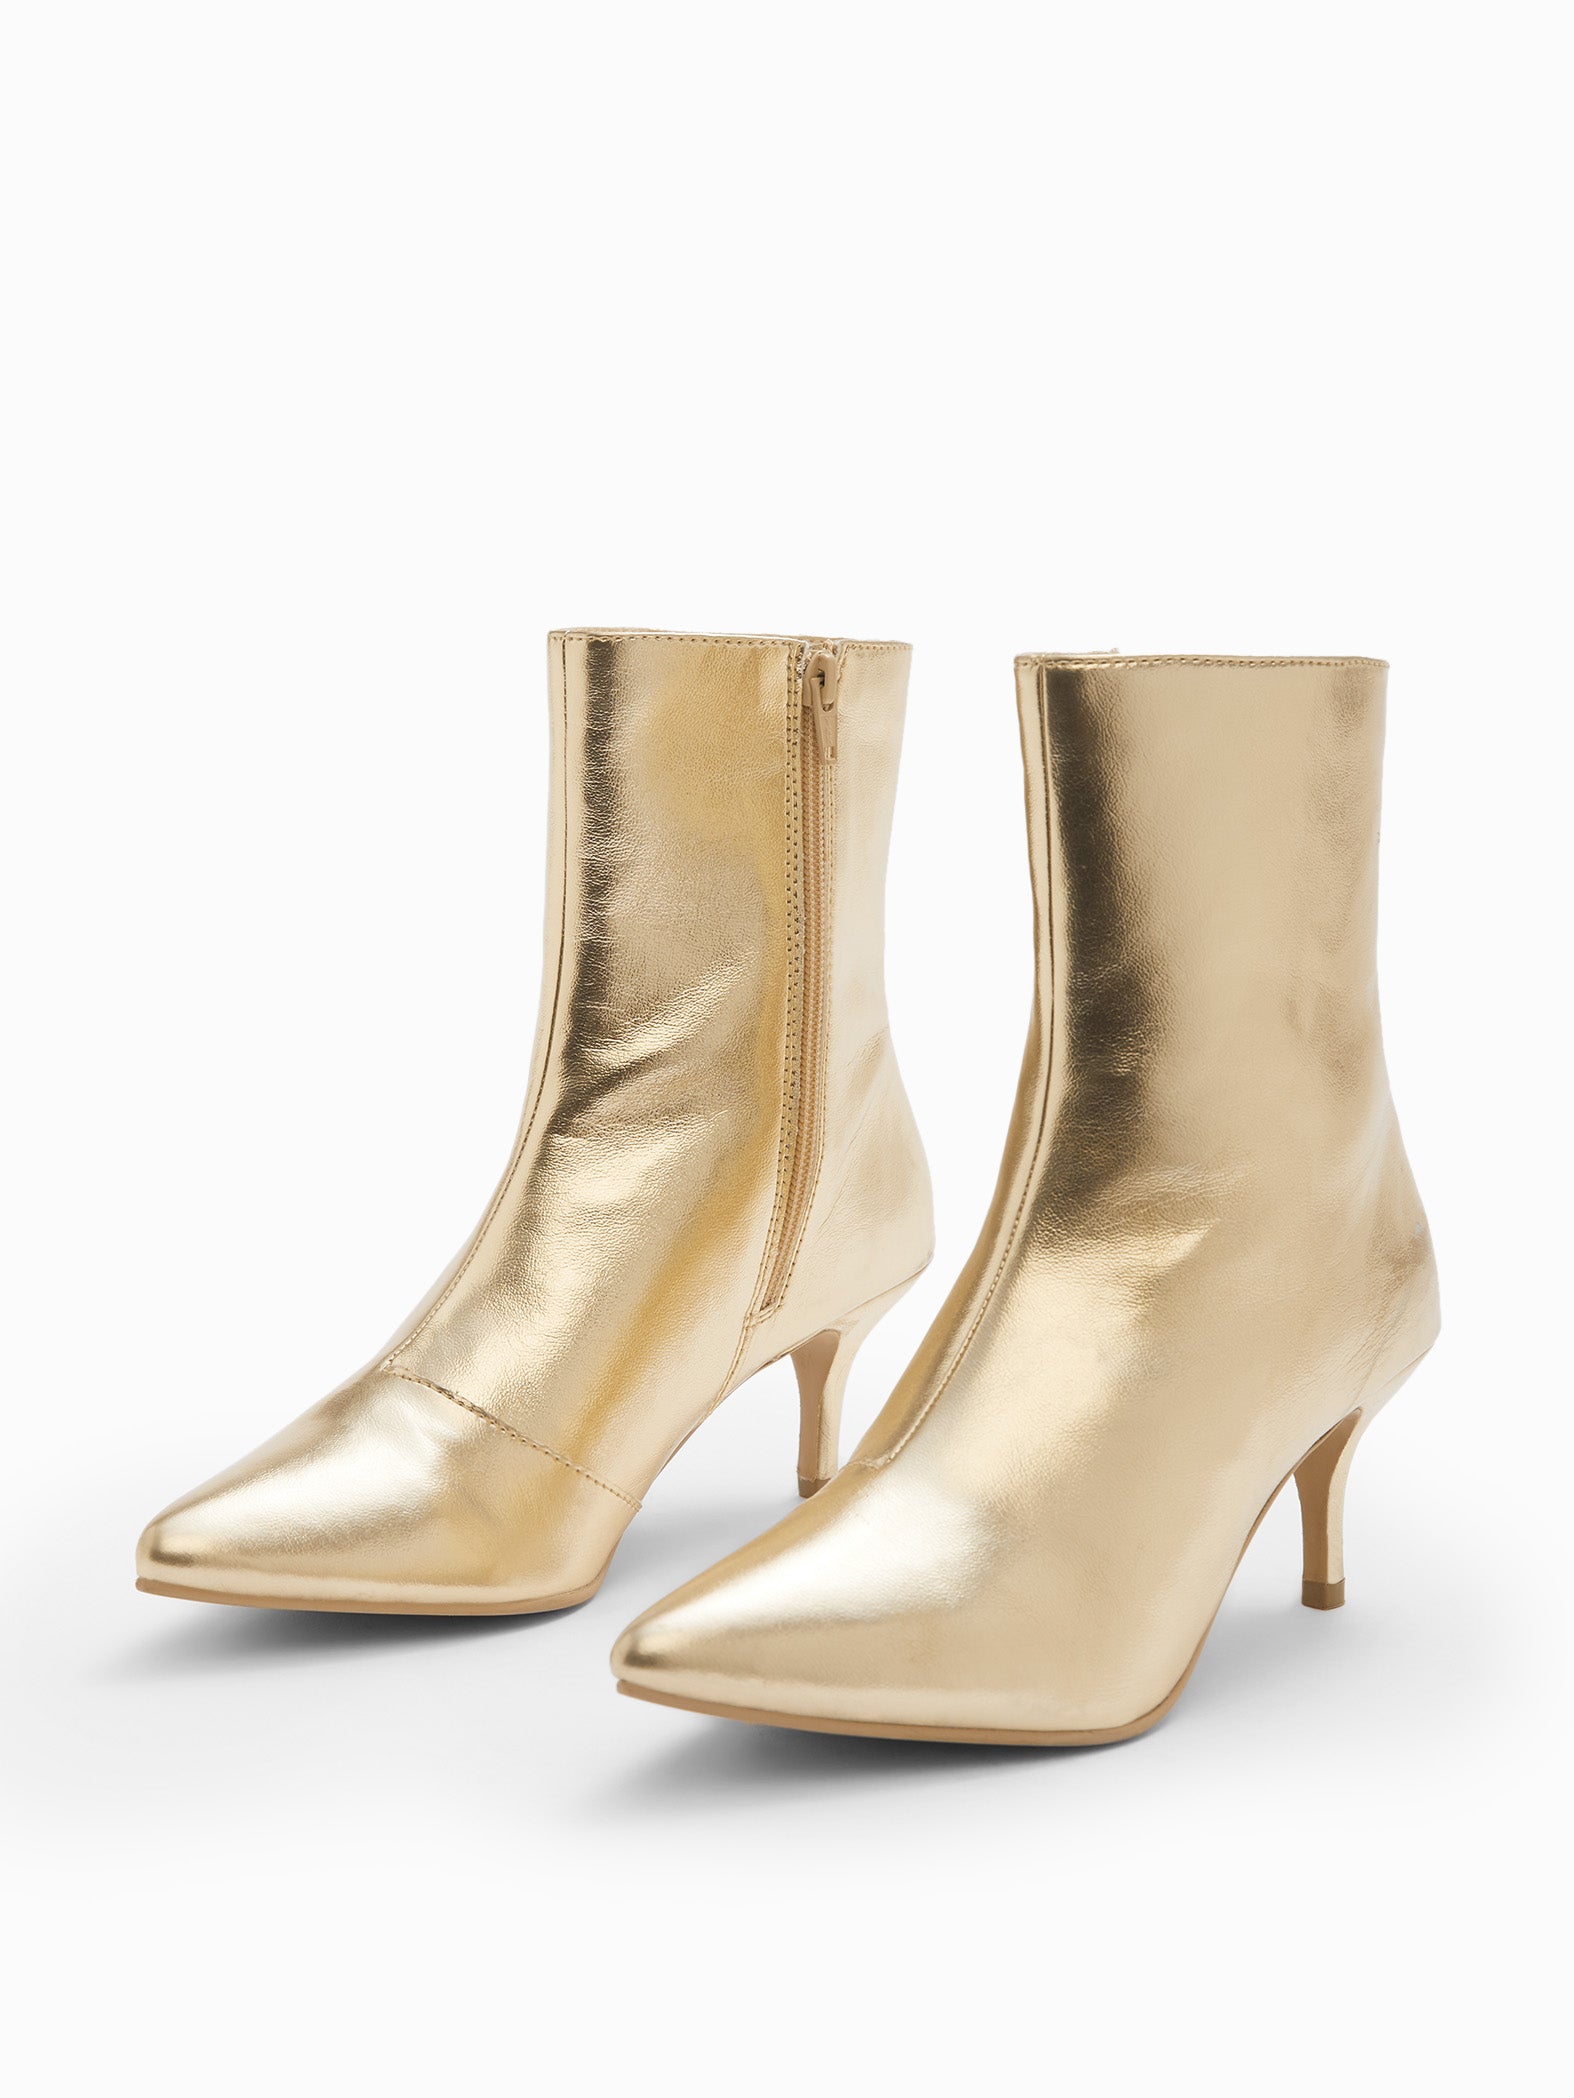 Metallic Gold Stiletto Boots